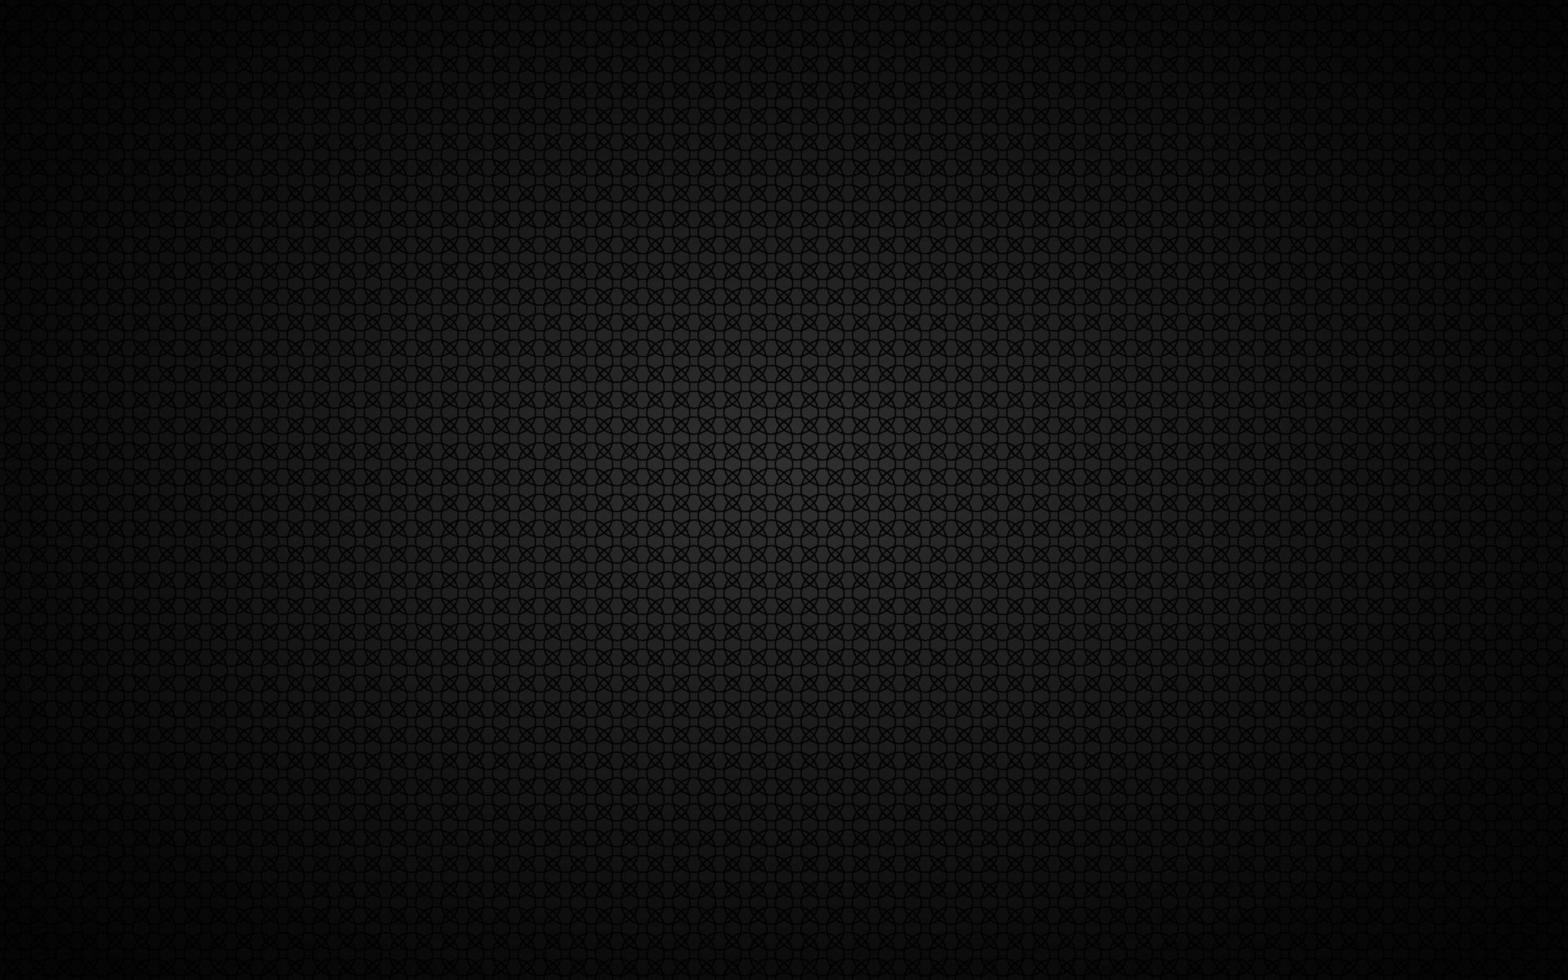 Dark widescreen background with simple black circles. Modern black geometric design. Simple vector illustration